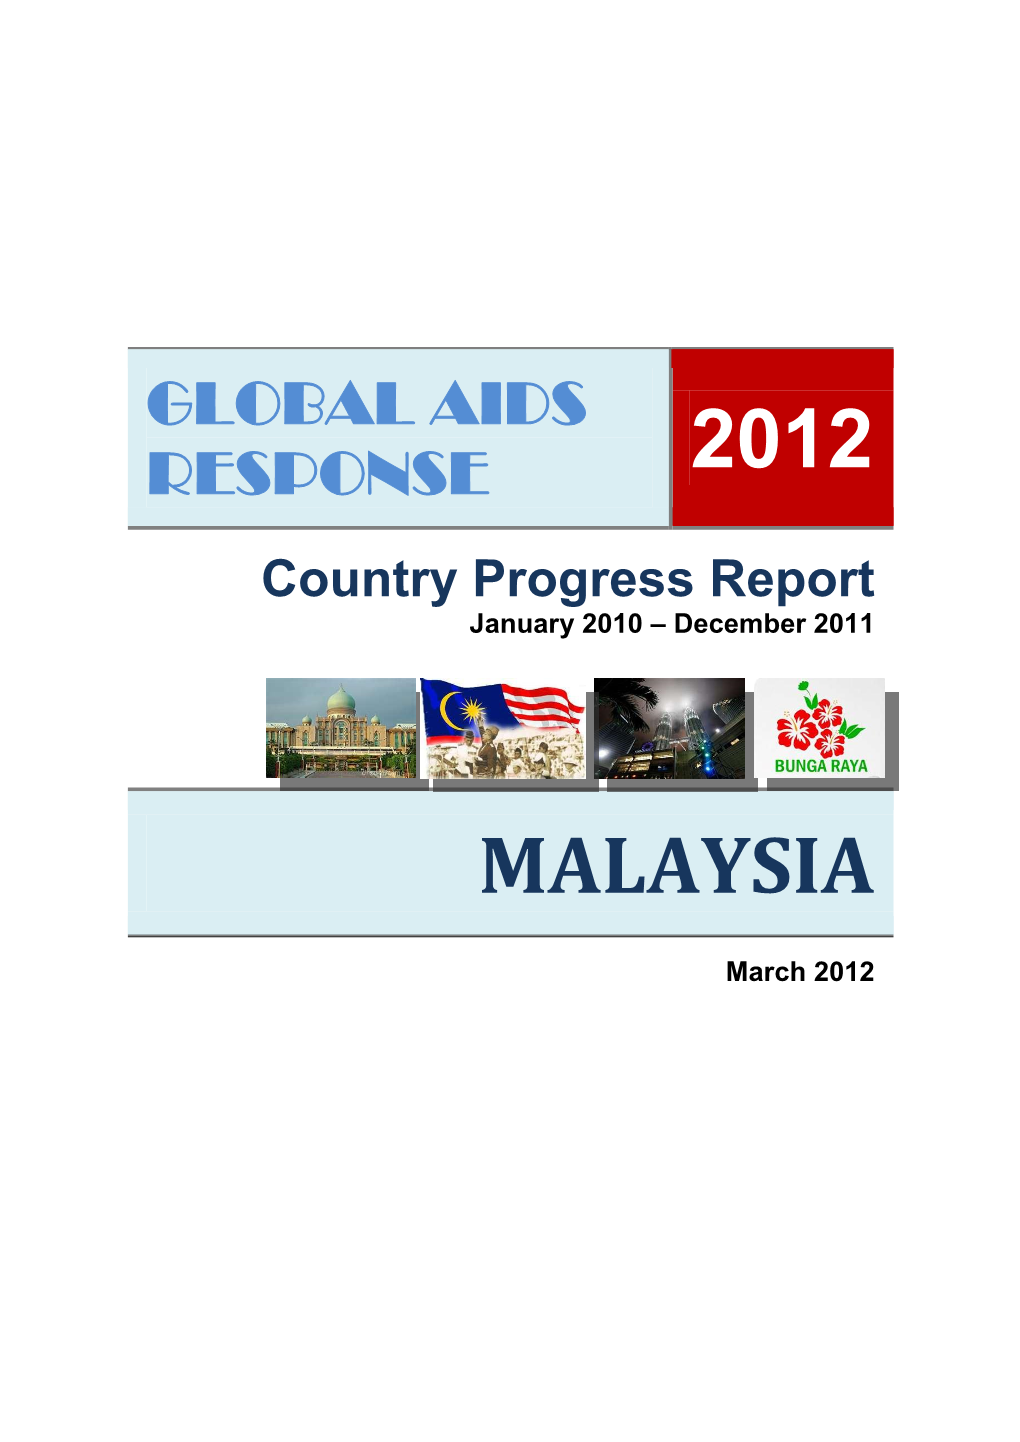 Global Aids Response Progress Report 2012]